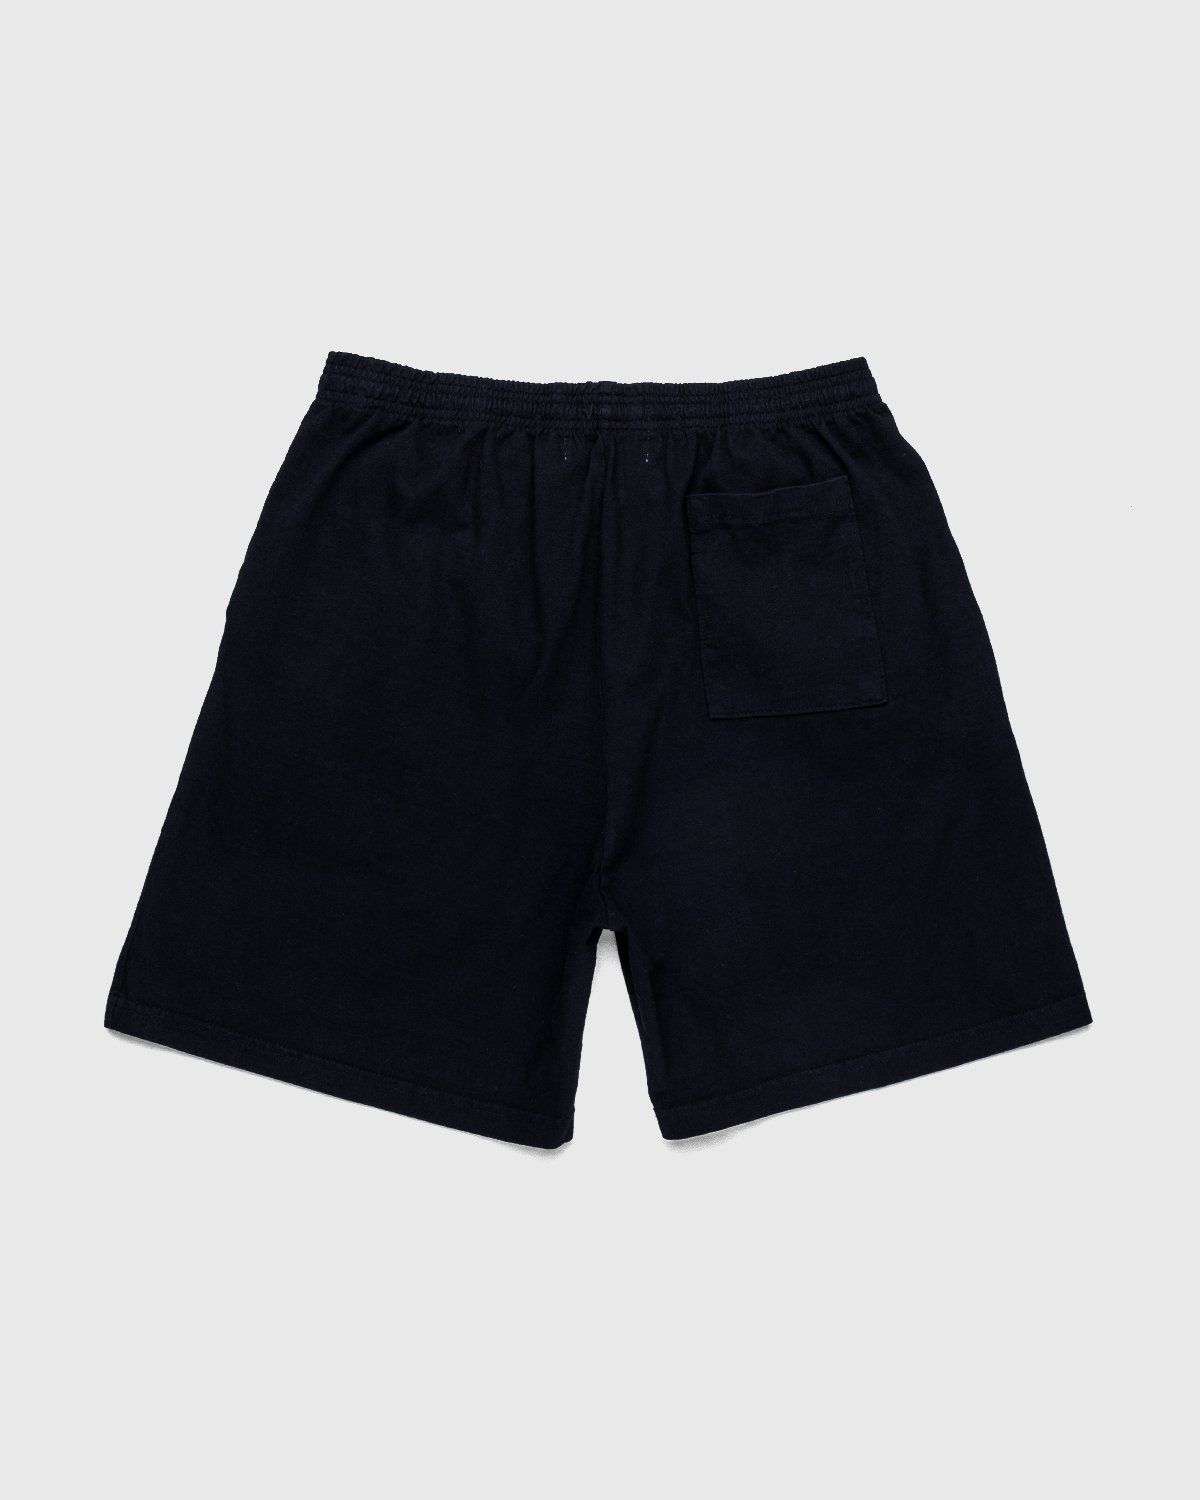 Bstroy x Highsnobiety – Shorts Black - Sweatshorts - Black - Image 2